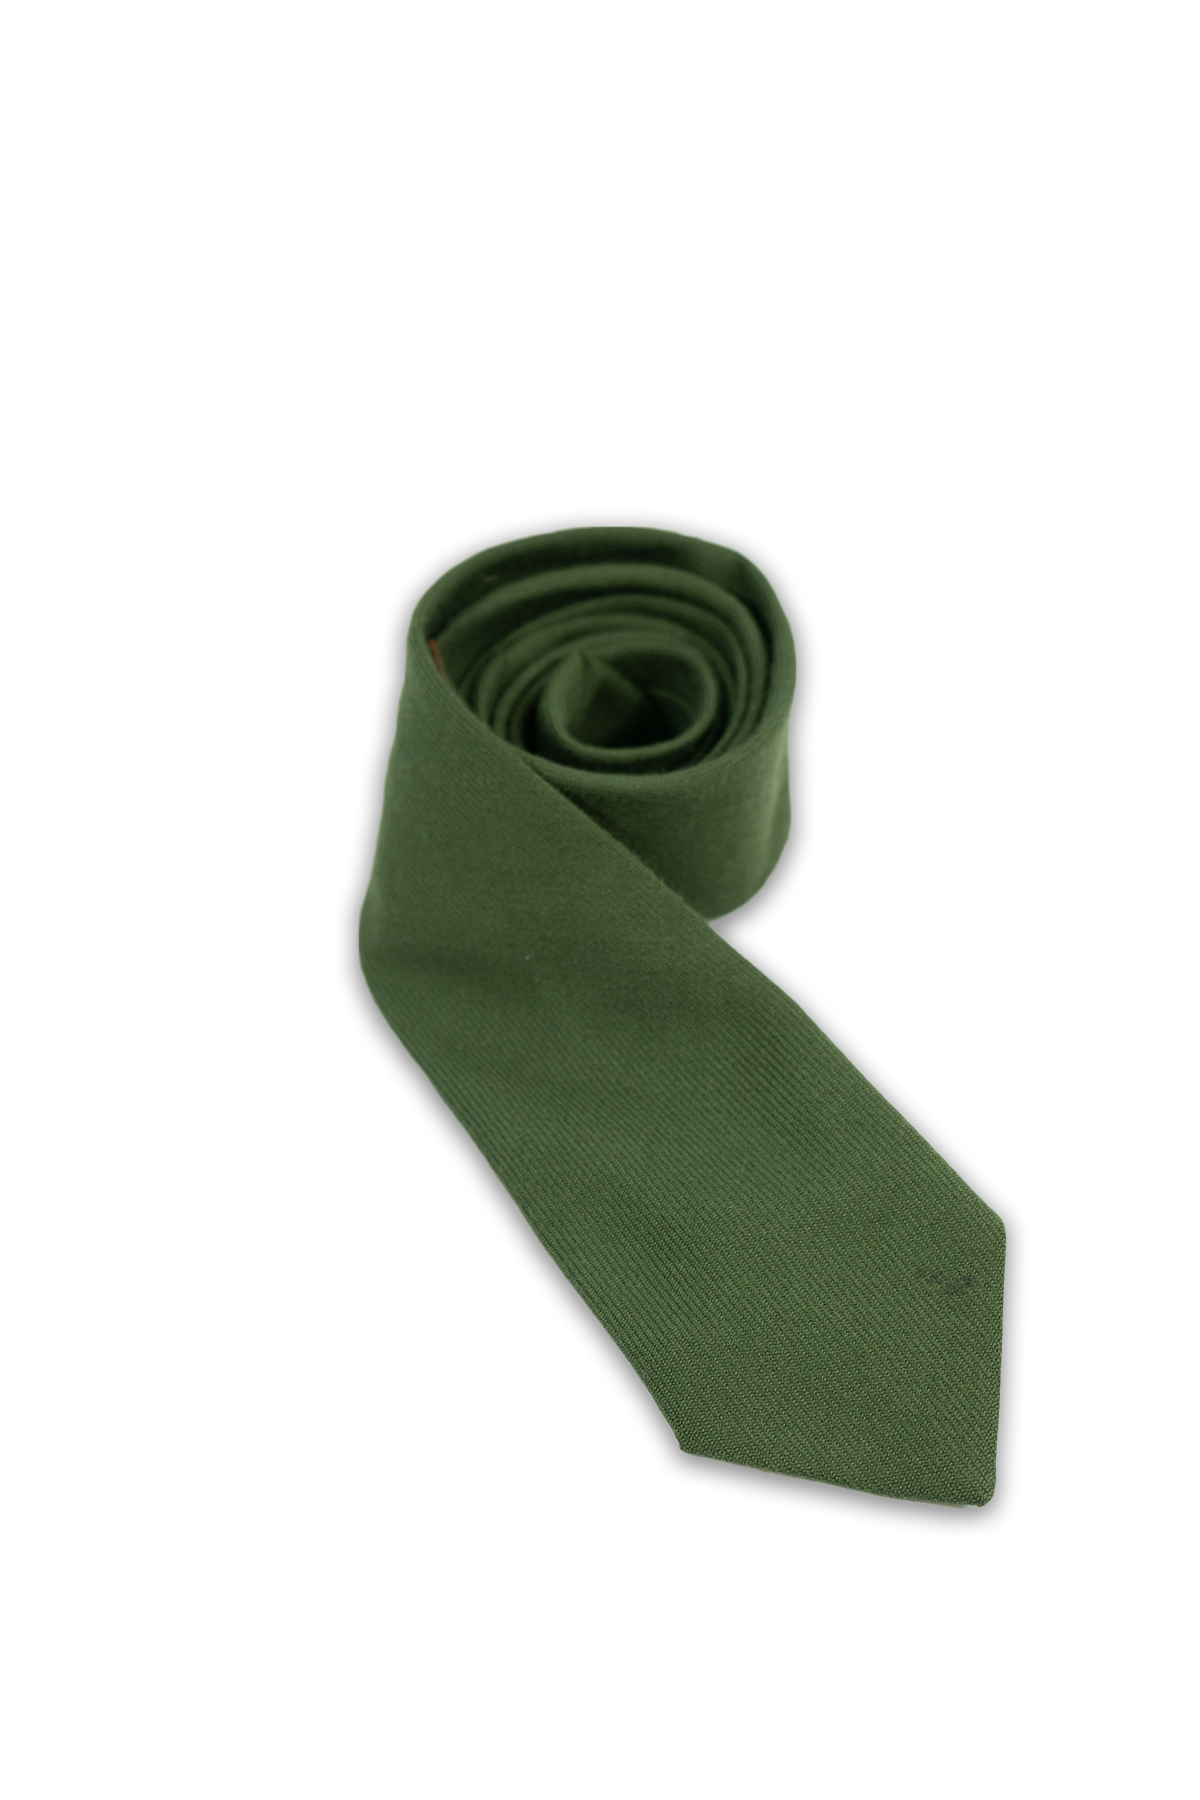 Green Muted Wool Tie (House of Edgar)